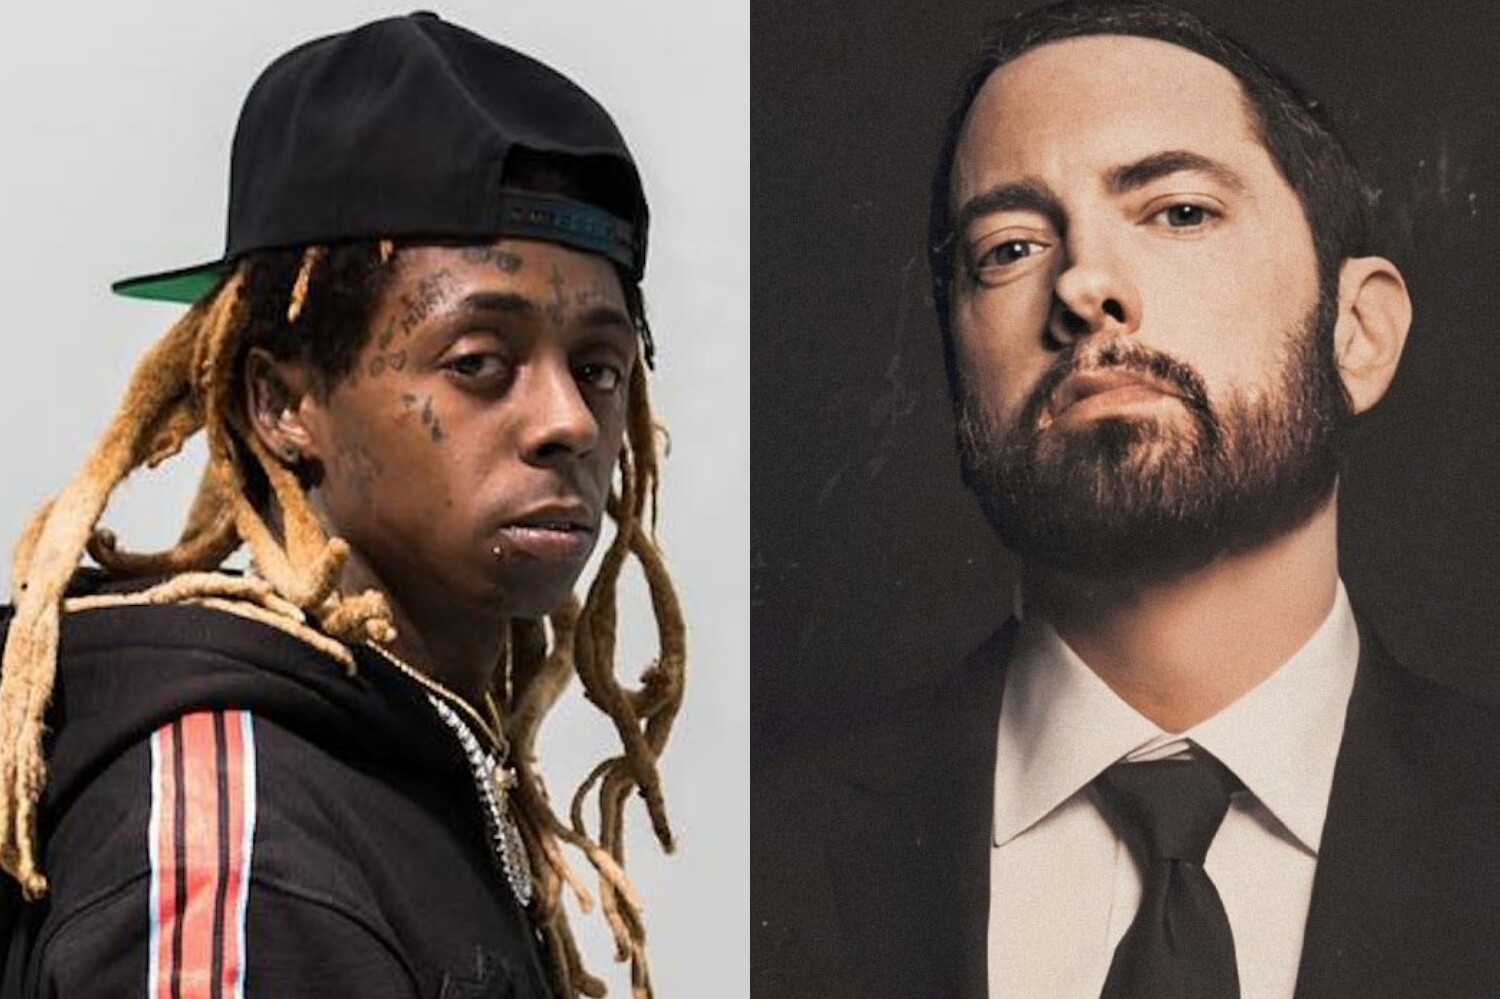 Lil Wayne and Eminem photos